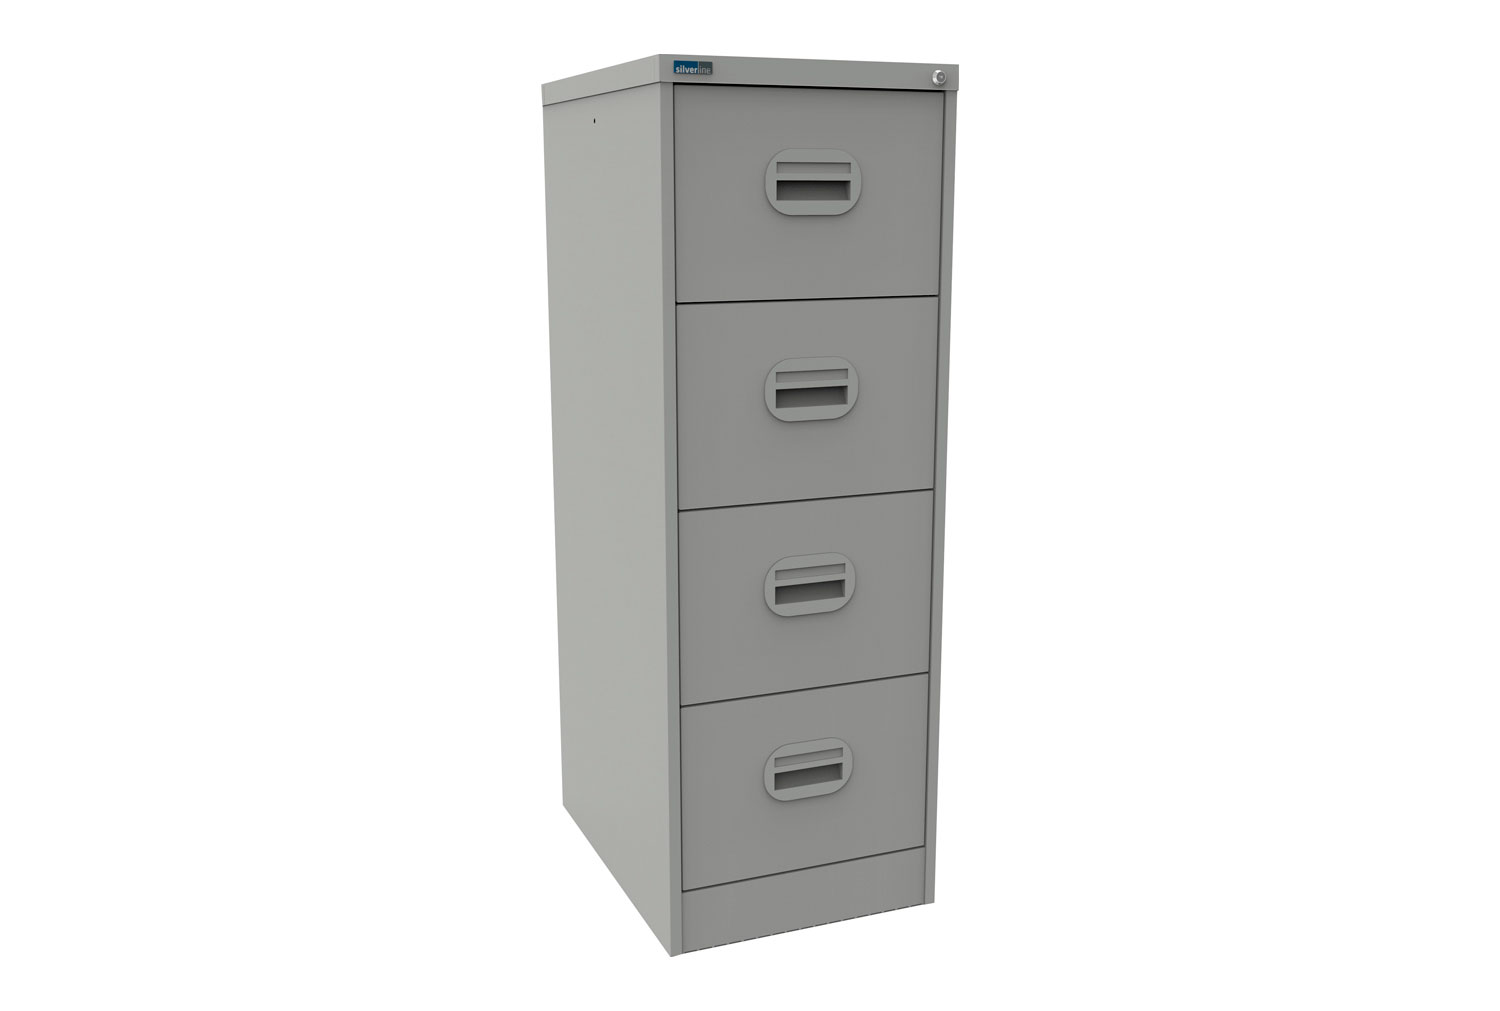 Silverline Kontrax 4 Drawer Filing Cabinet, 4 Drawer - 46wx62dx132h (cm), Light Grey, Express Delivery